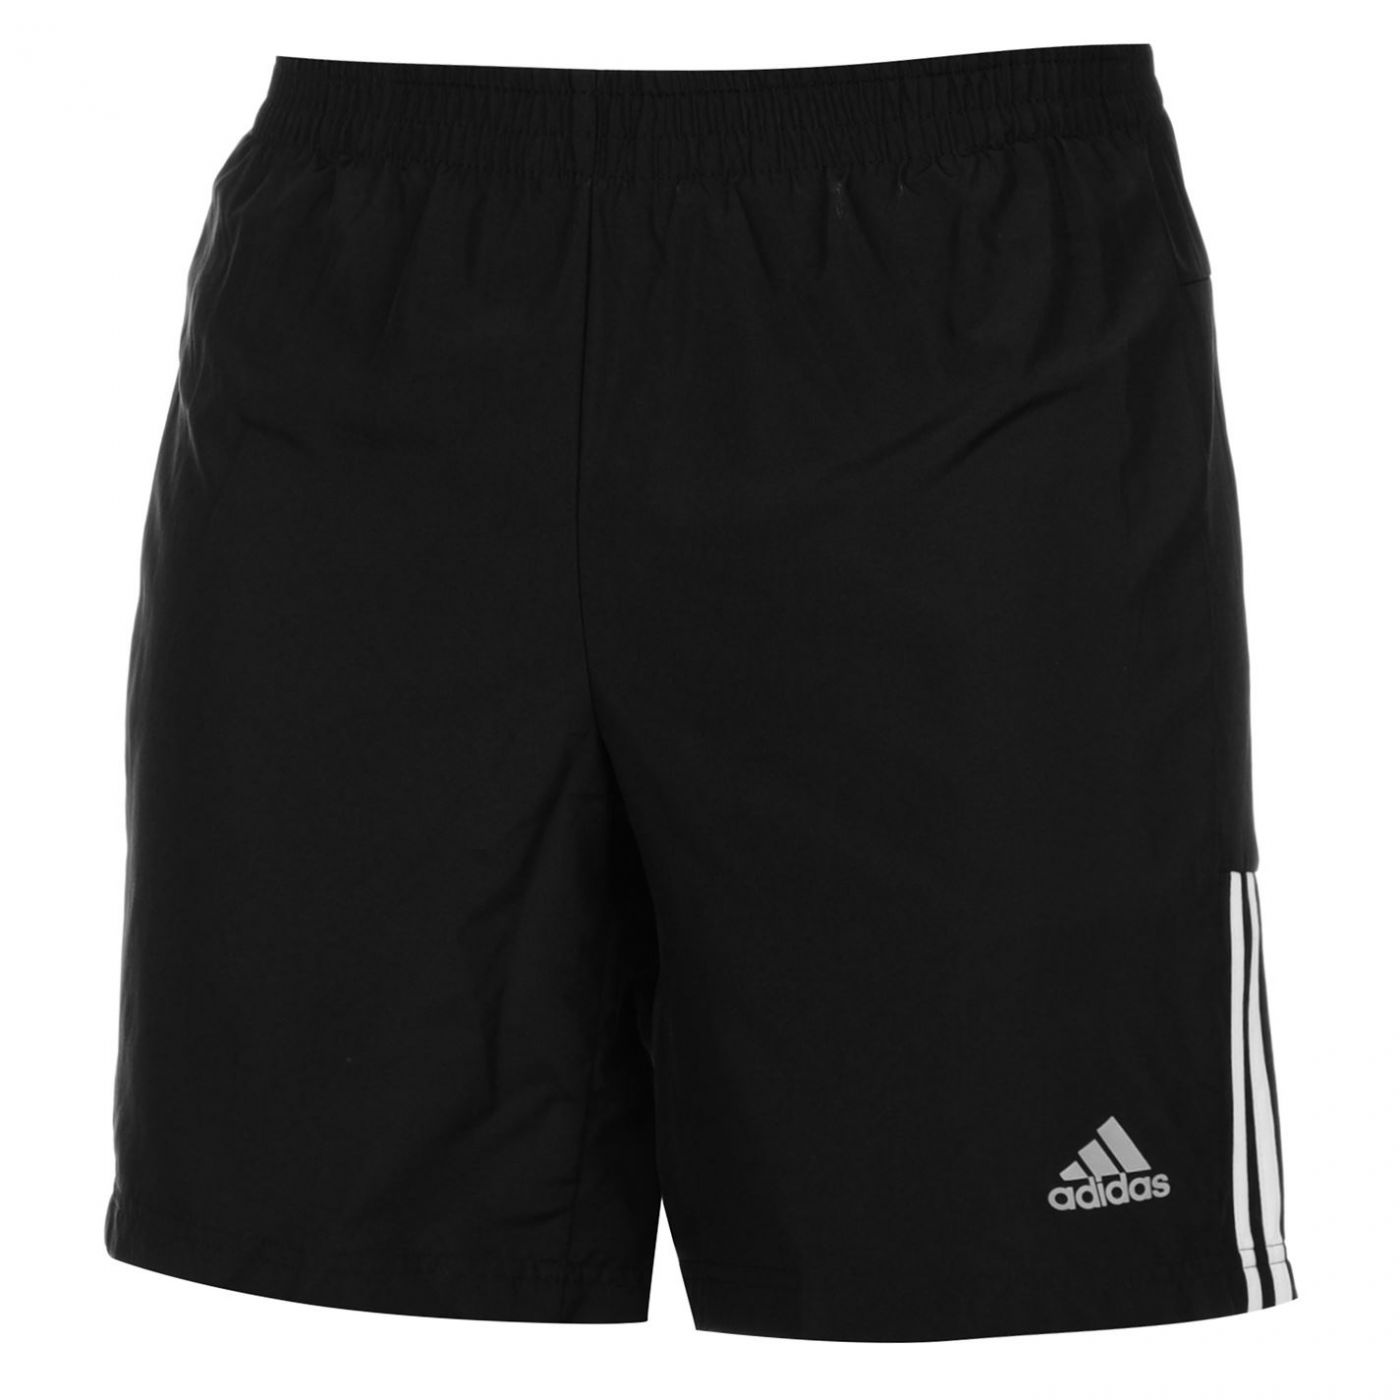 Adidas Questar Seven Inch Shorts Mens